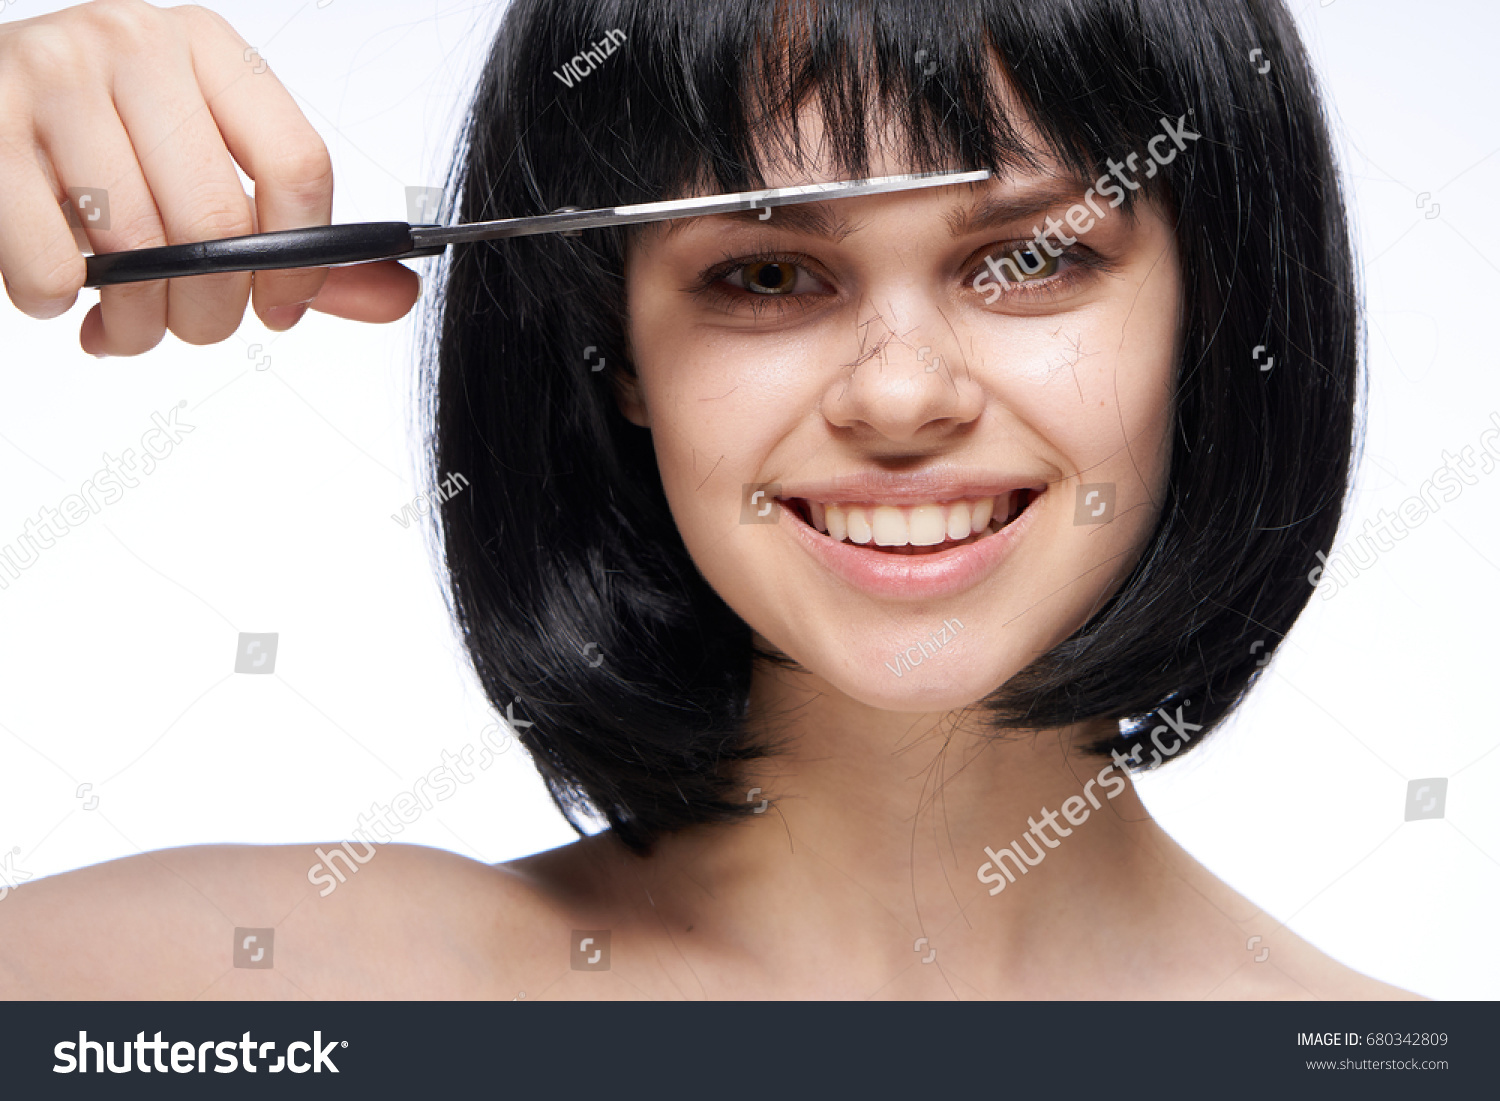 Woman Cuts Her Hair Scissors On Stock Photo 680342809 Shutterstock